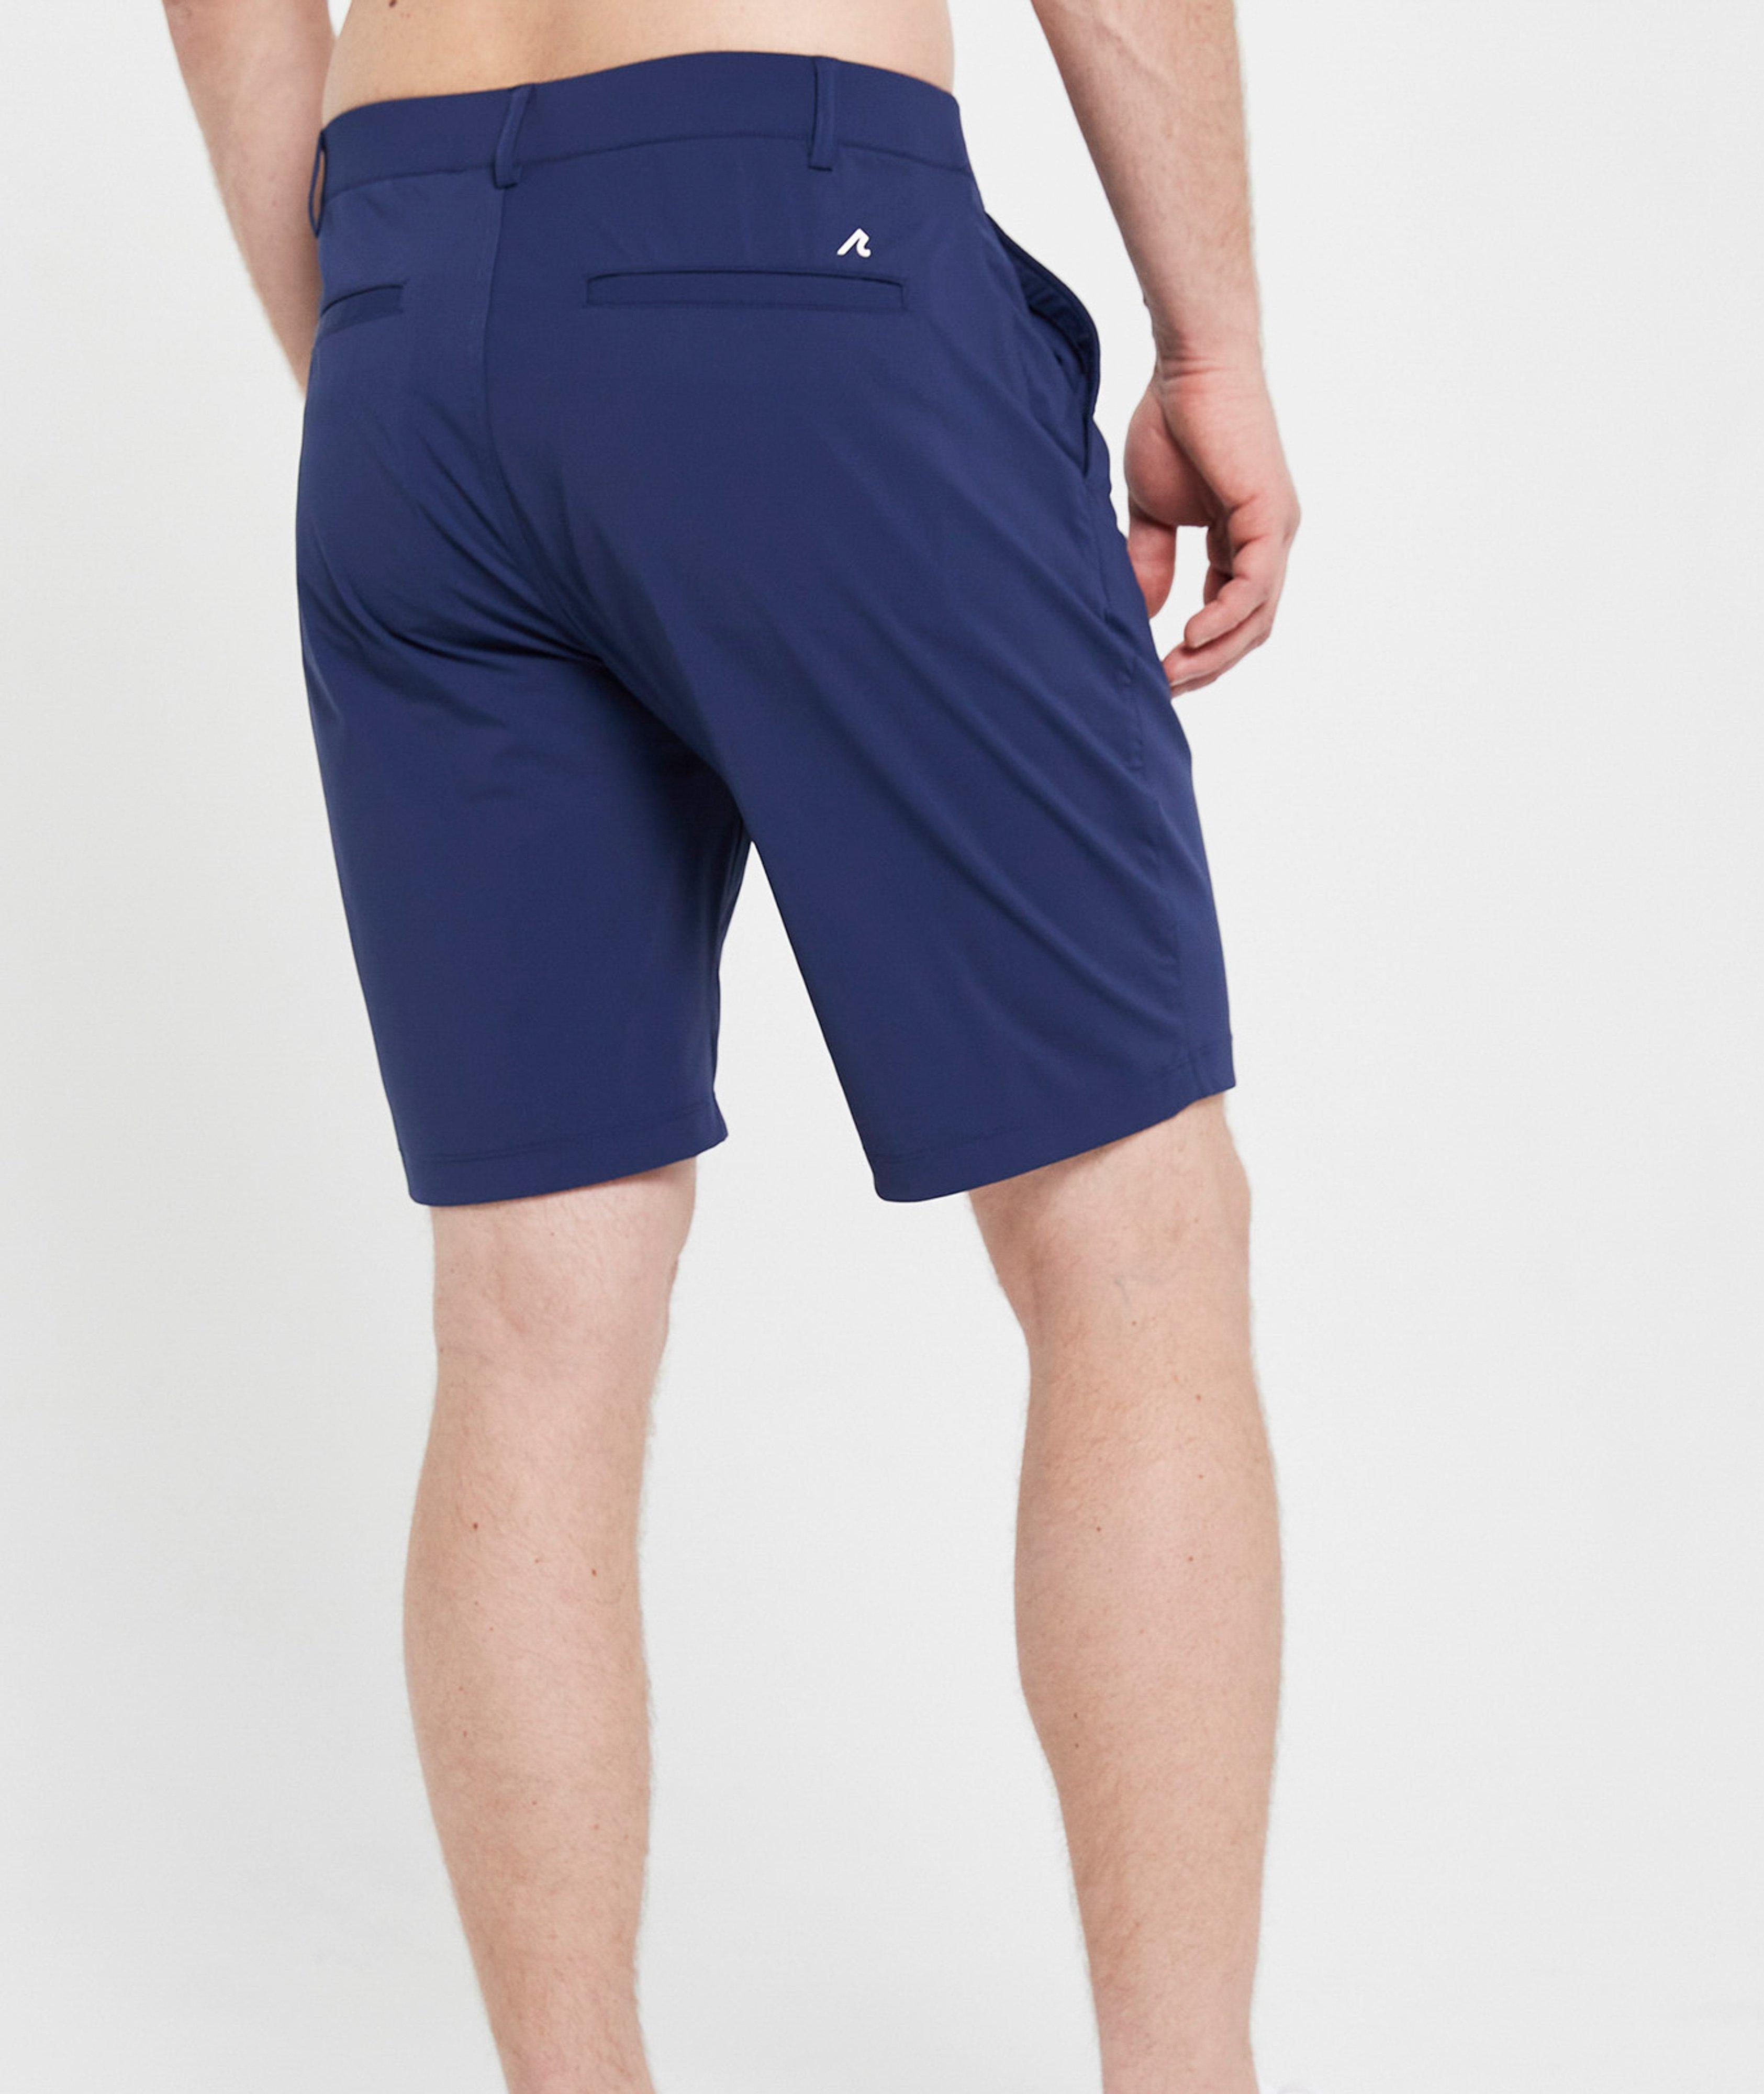 Hanover Pull-On Shorts image 2